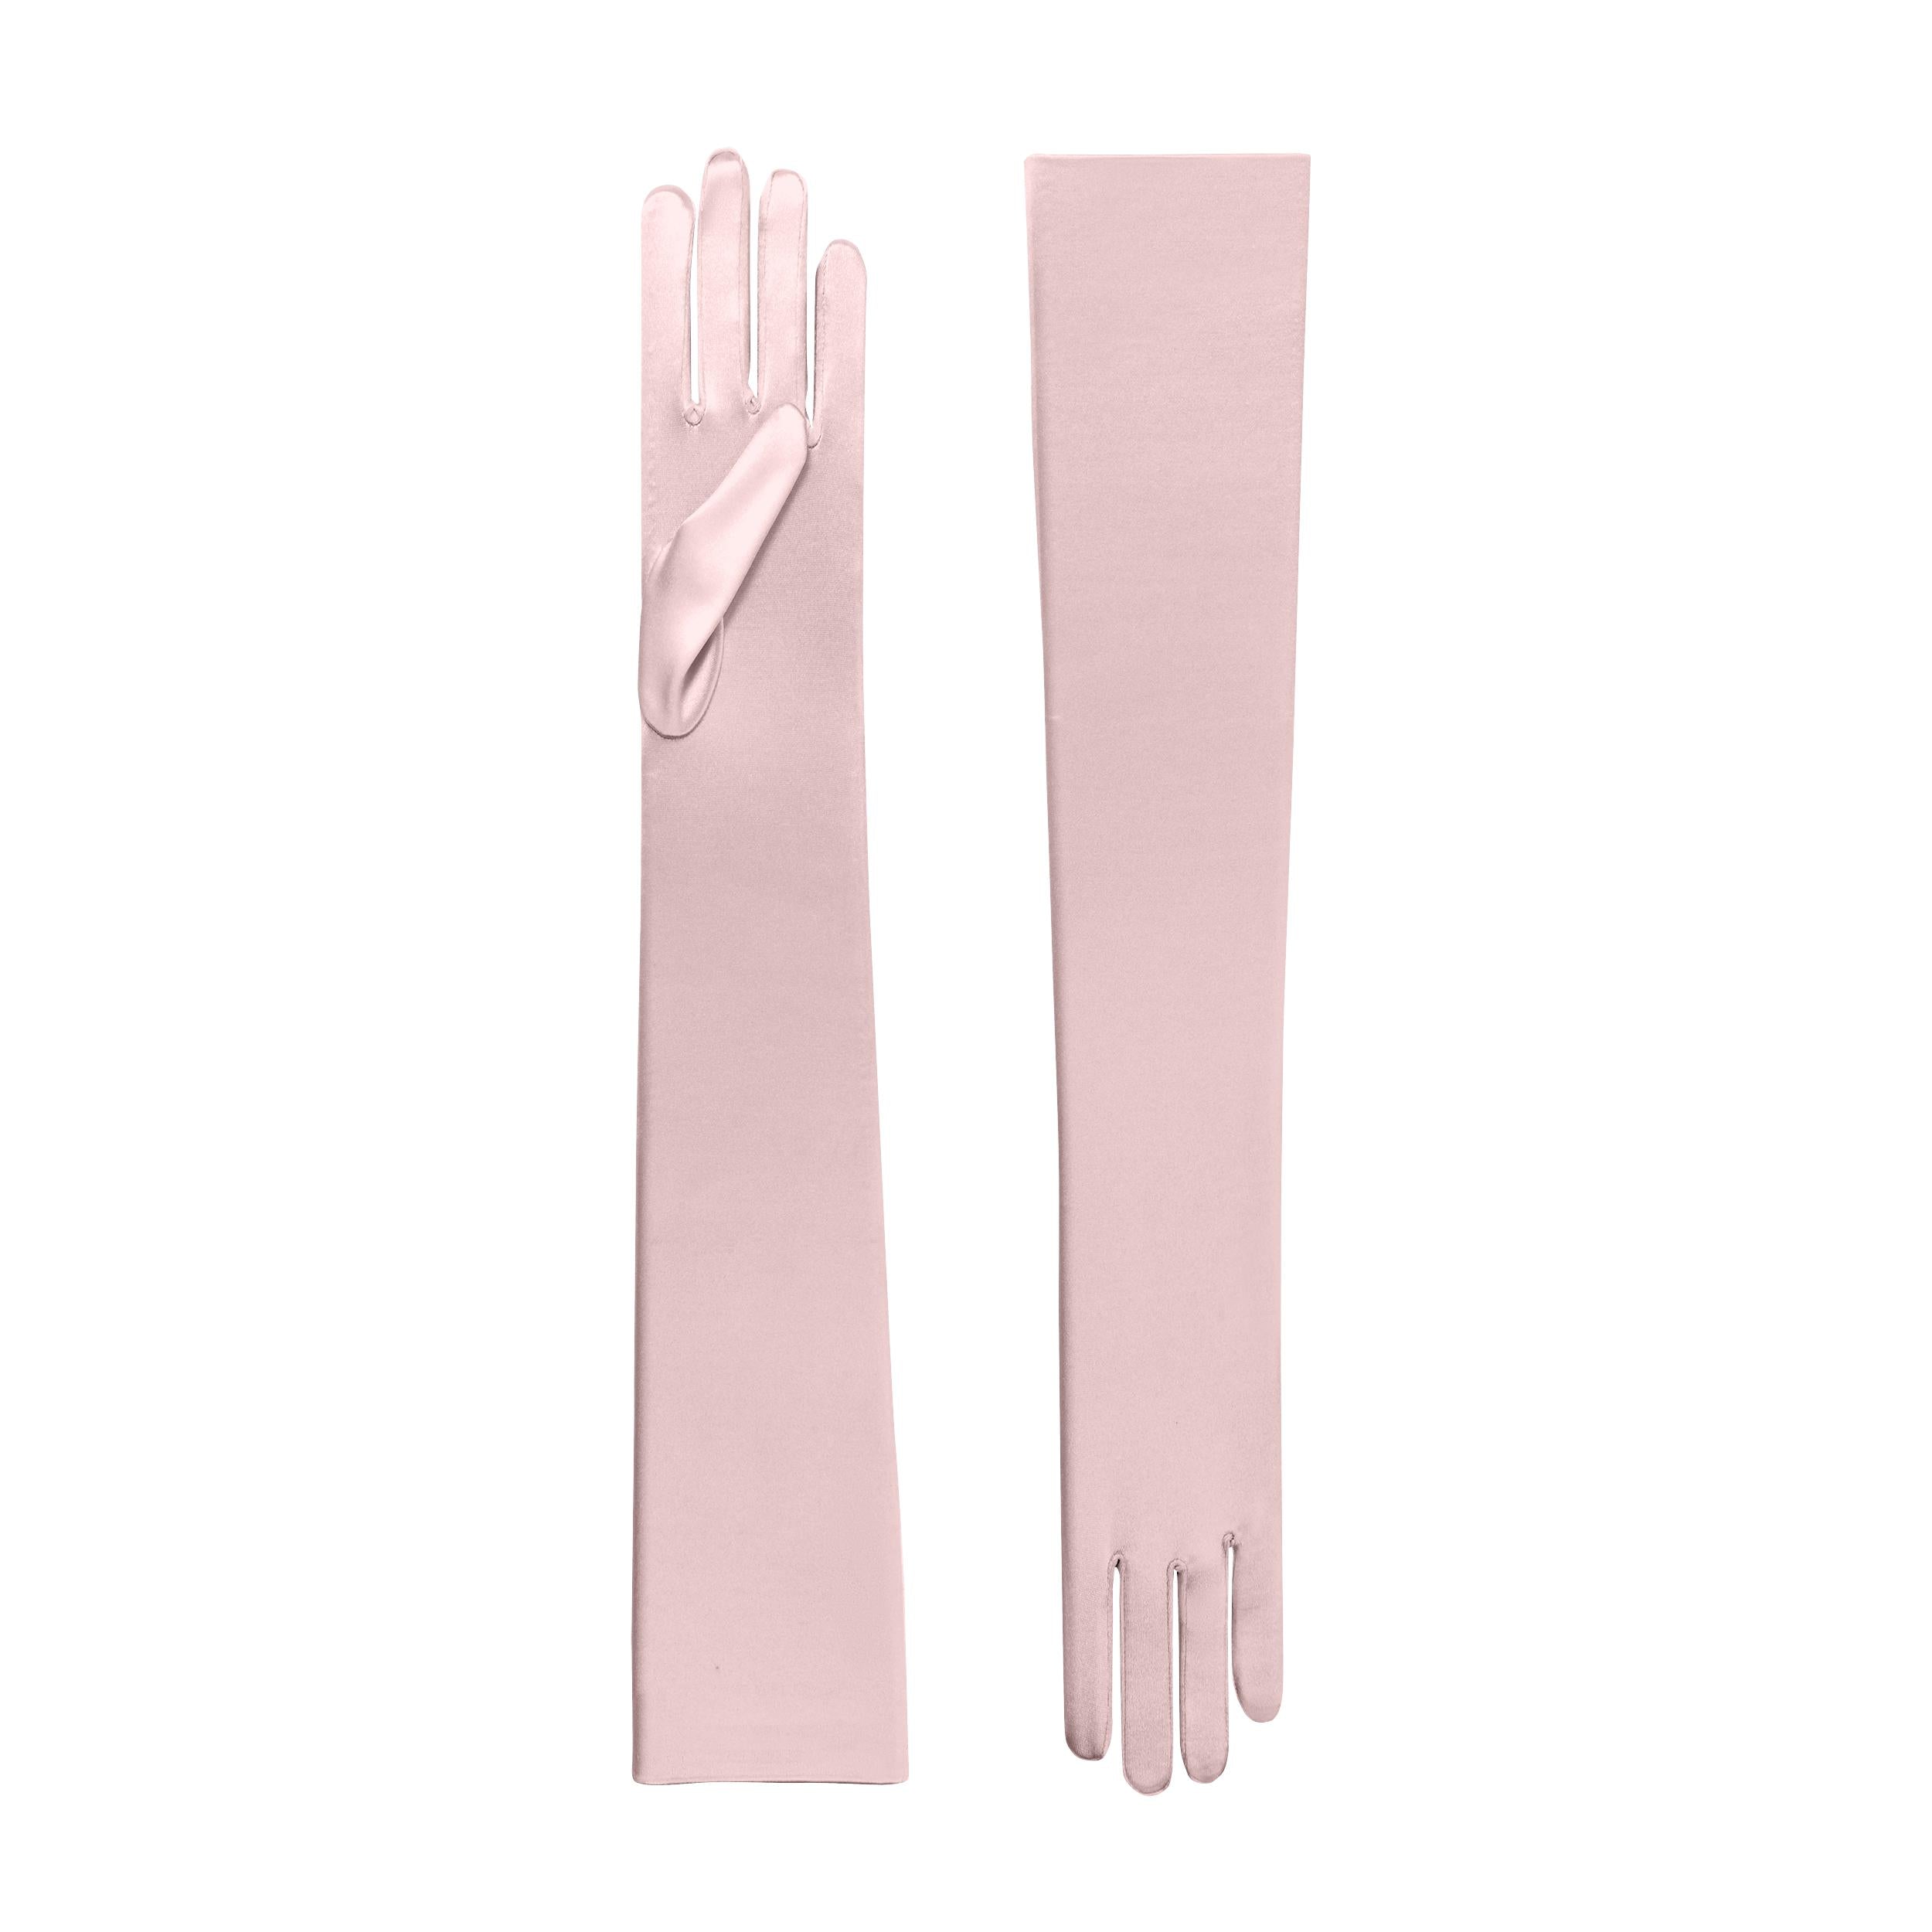 Cornelia James - Pink Satin Opera Gloves - Hermione - Size Large (8½) - Made to Measure Evening Gloves by Cornelia James